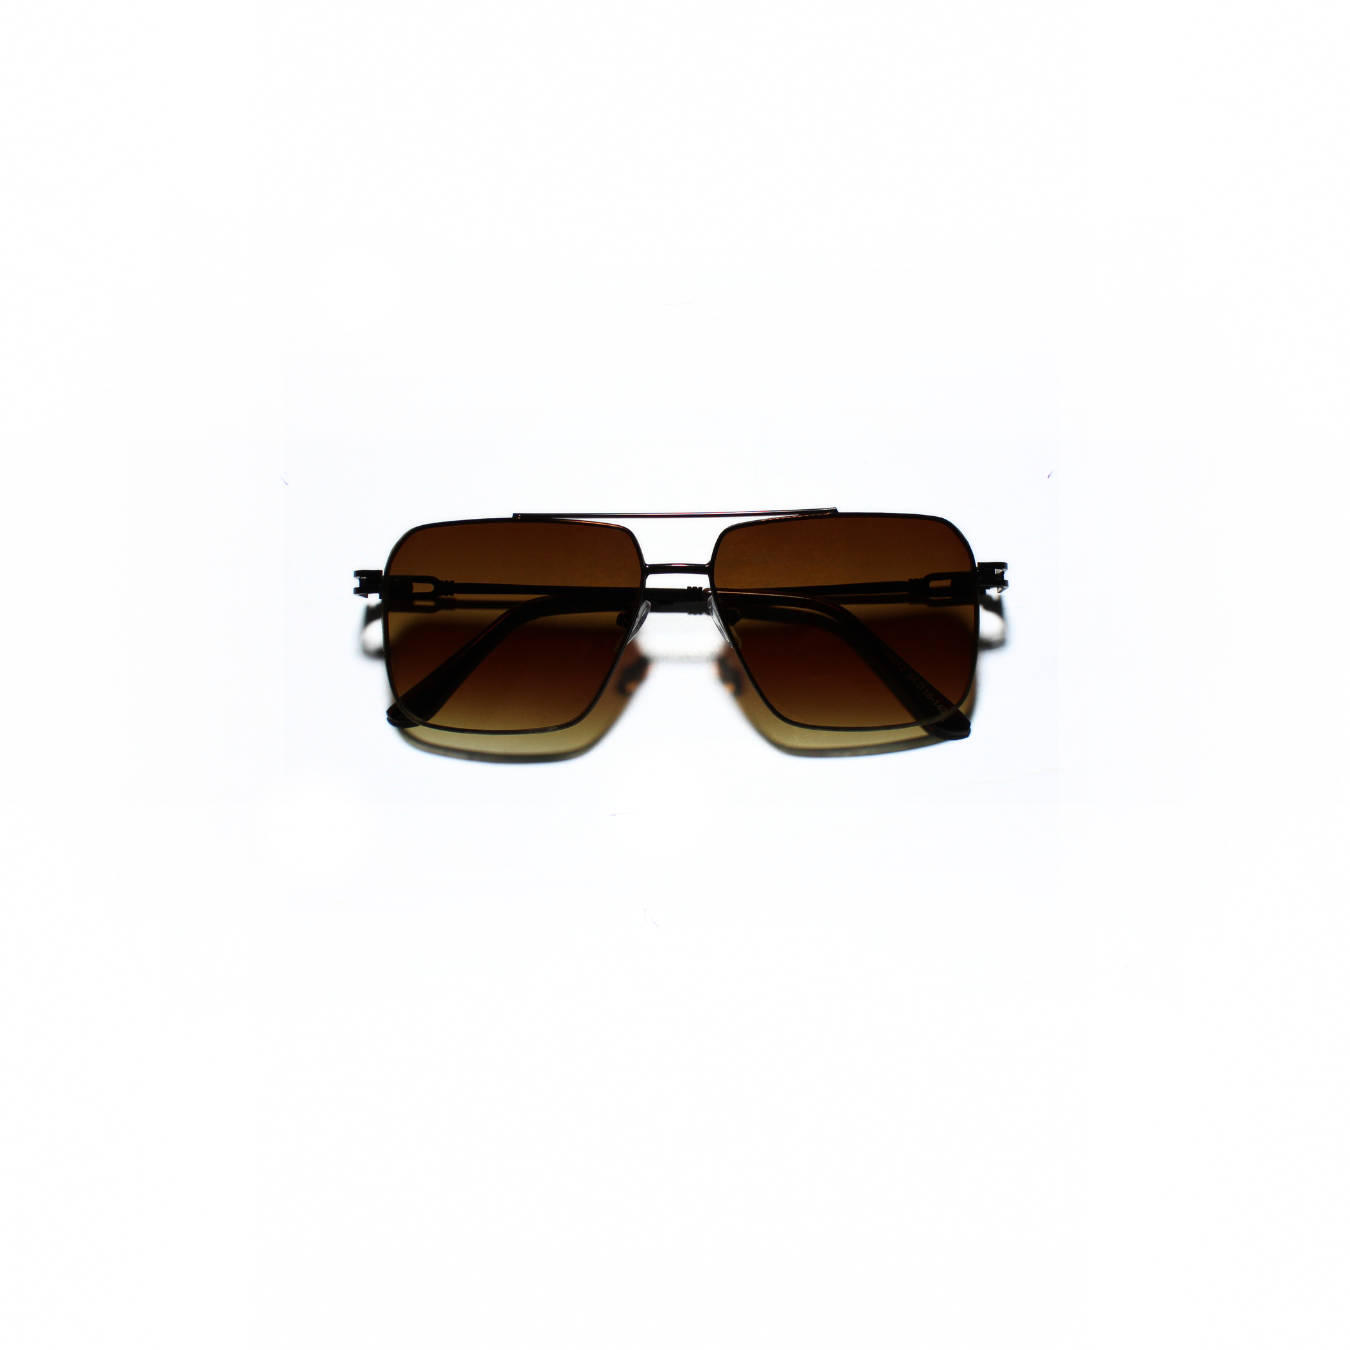 ARTHUR-II//002 I Sunglasses for Women - Specsview